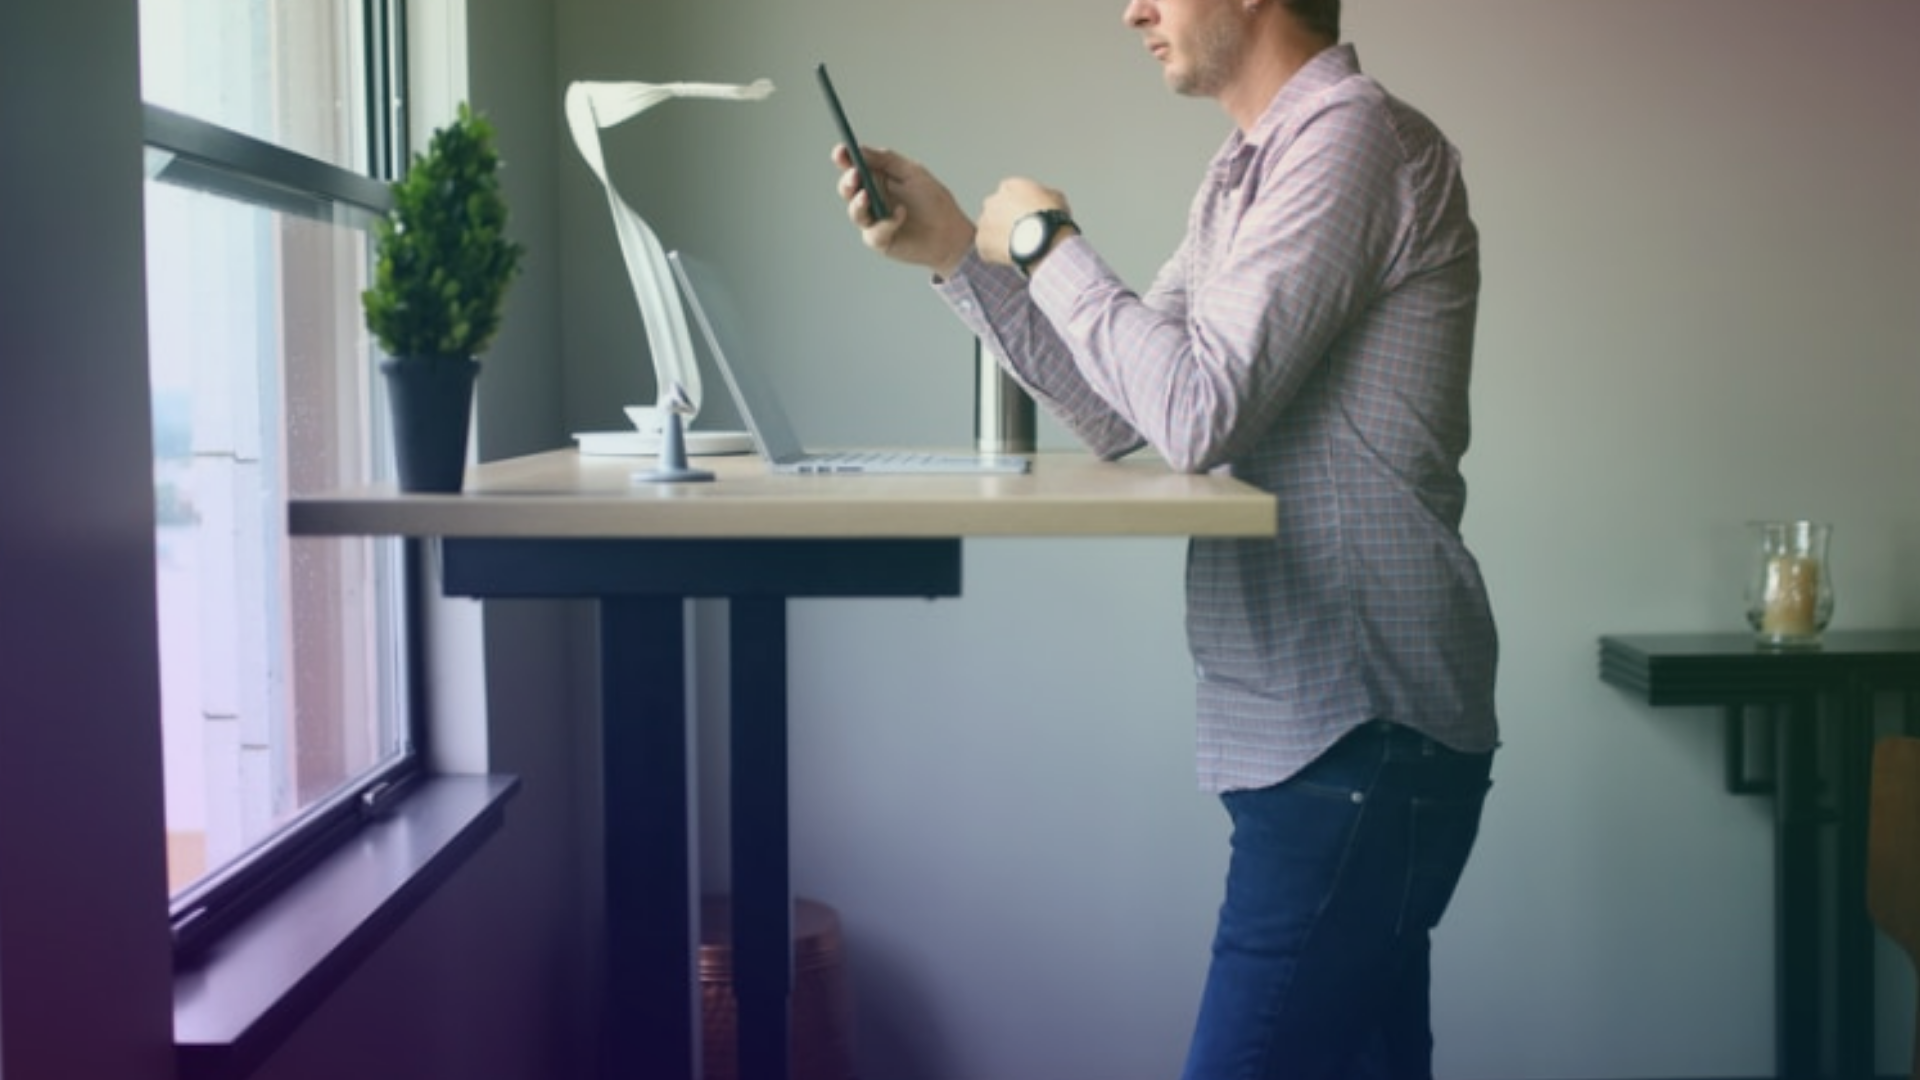 standing desk ergonomics benefits